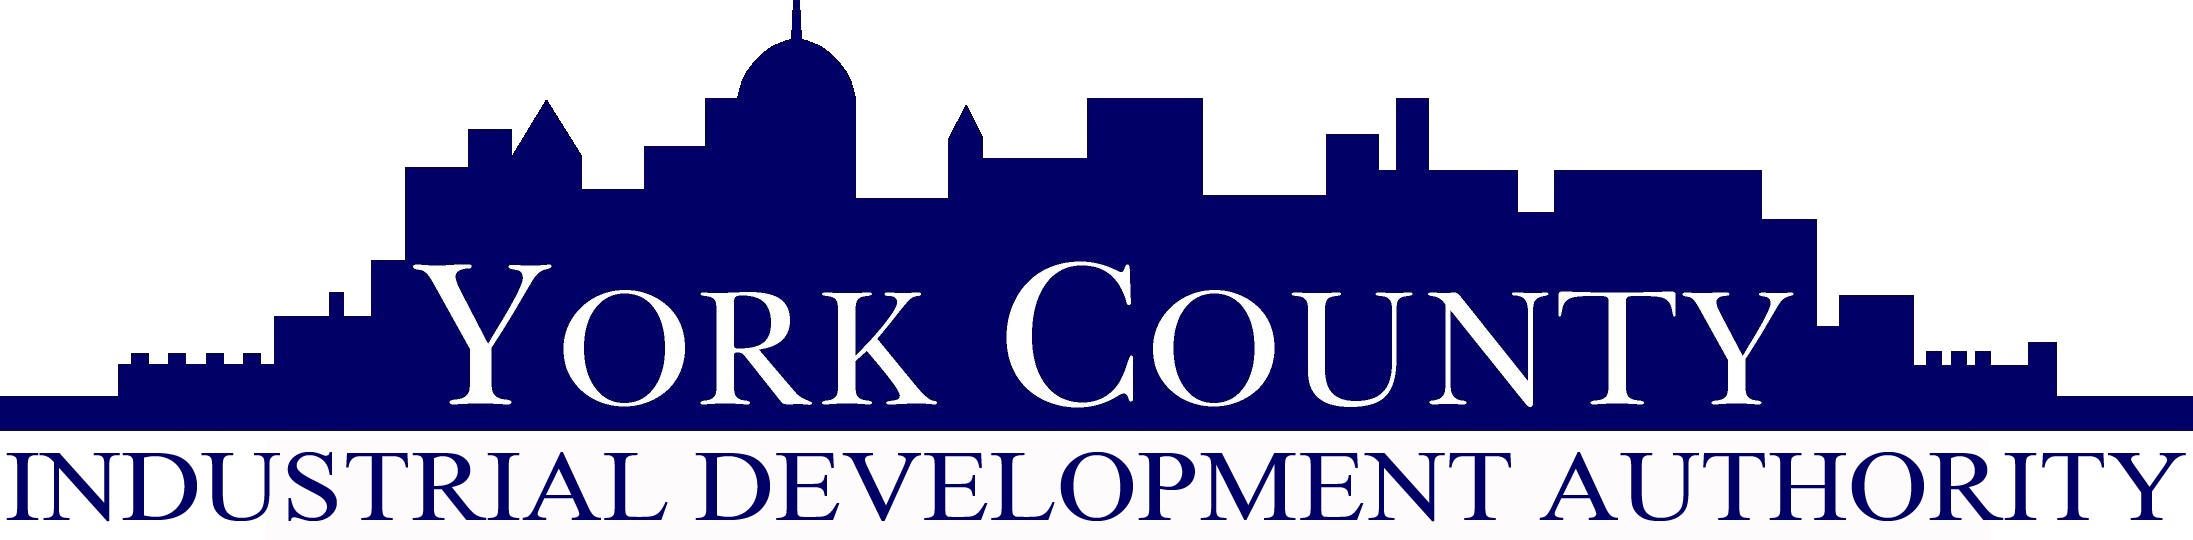 York County Industrial Development Authority logo